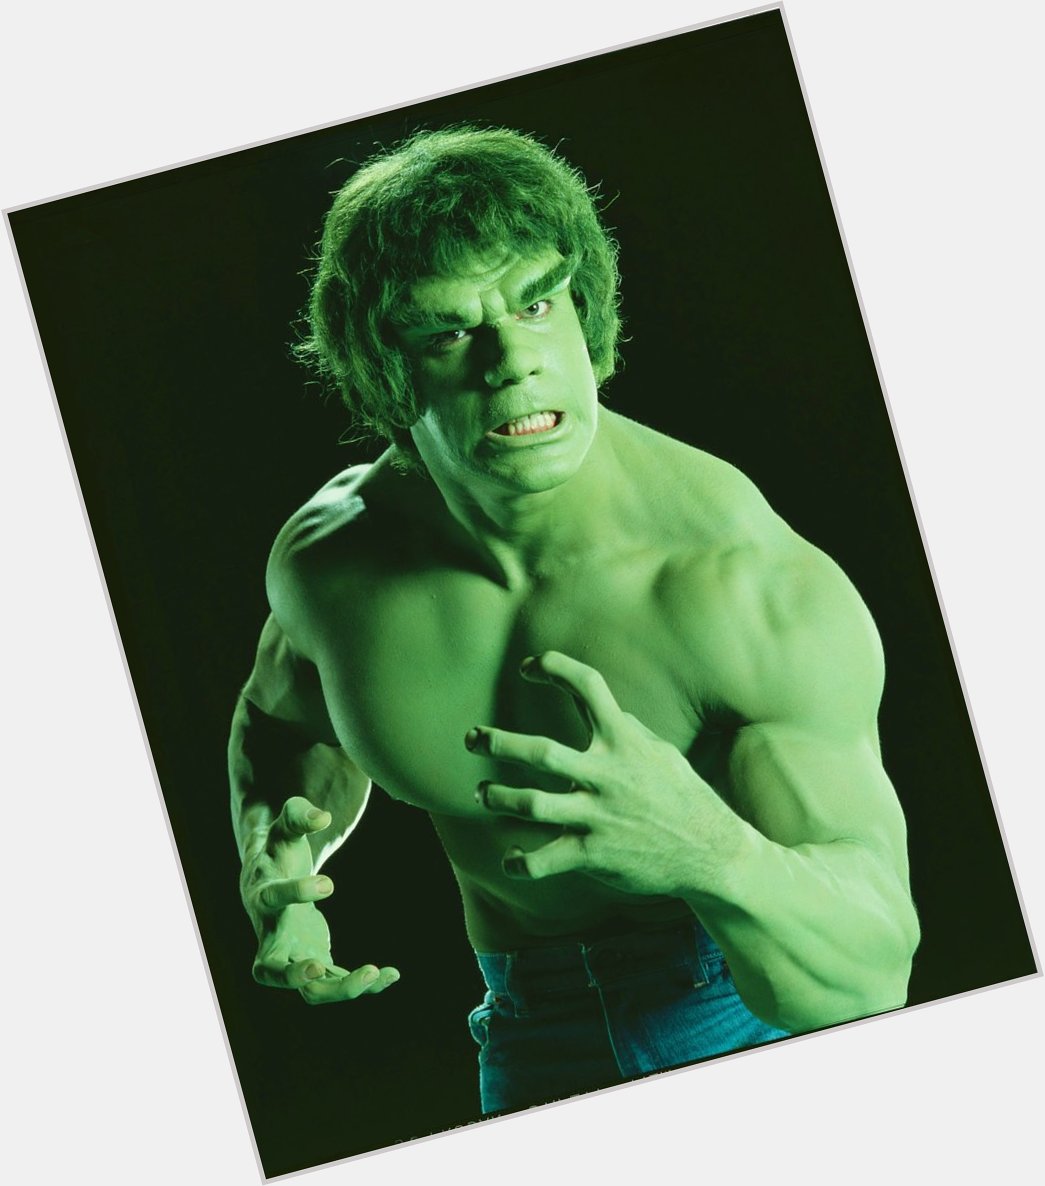 He is the big green giant that we all love!!! A very happy 69th birthday to Hulk aka Lou Ferrigno!!! 